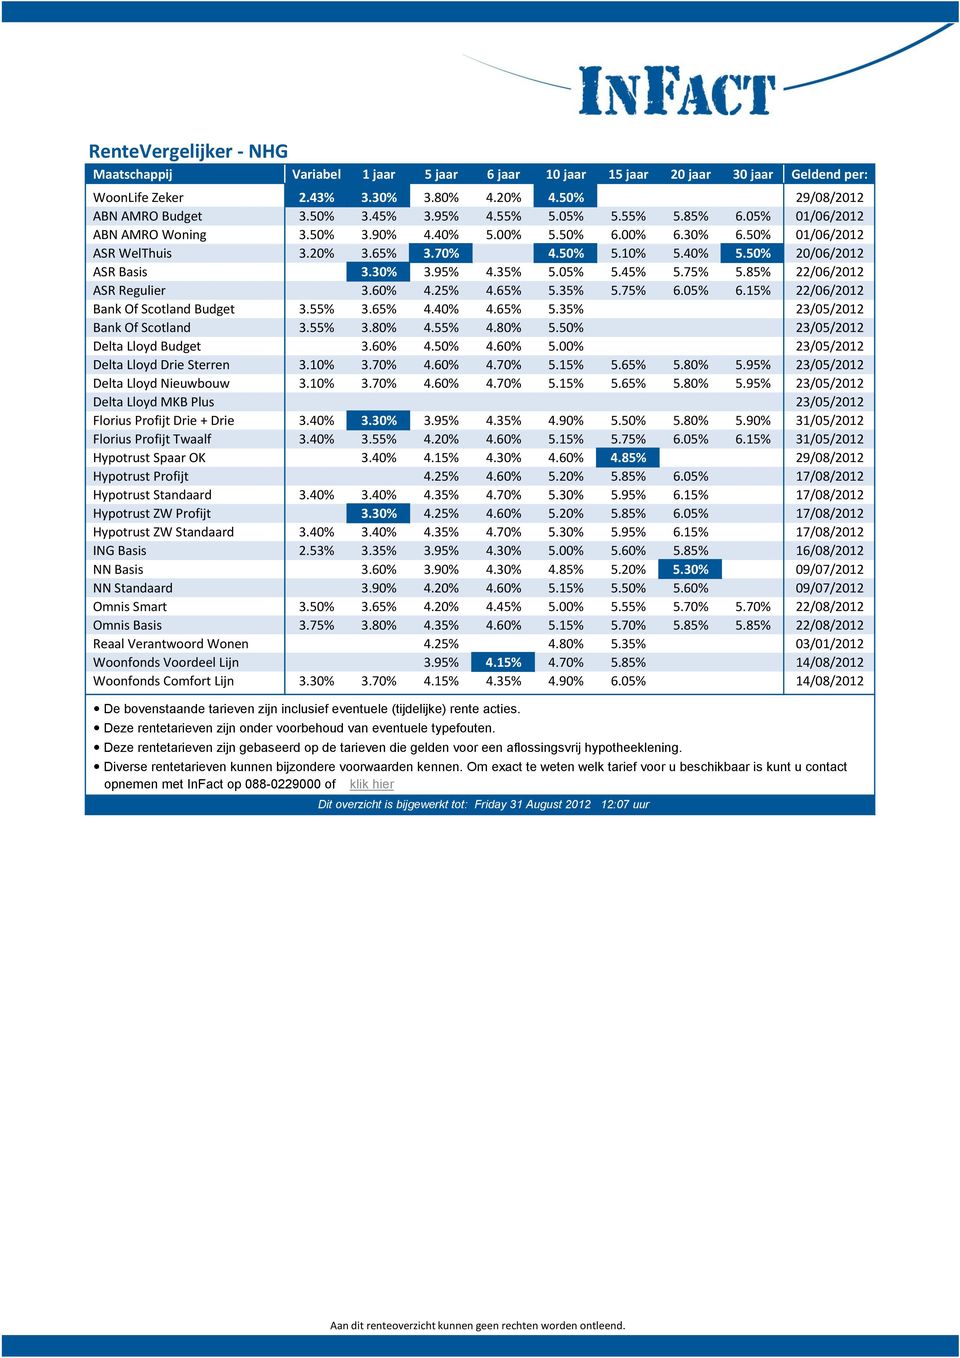 35% 5.75% 6.05% 6.15% 22/06/2012 Bank Of Scotland Budget 3.55% 3.65% 4.40% 4.65% 5.35% 23/05/2012 Bank Of Scotland 3.55% 3.80% 4.55% 4.80% 5.50% 23/05/2012 Delta Lloyd Budget 3.60% 4.50% 4.60% 5.